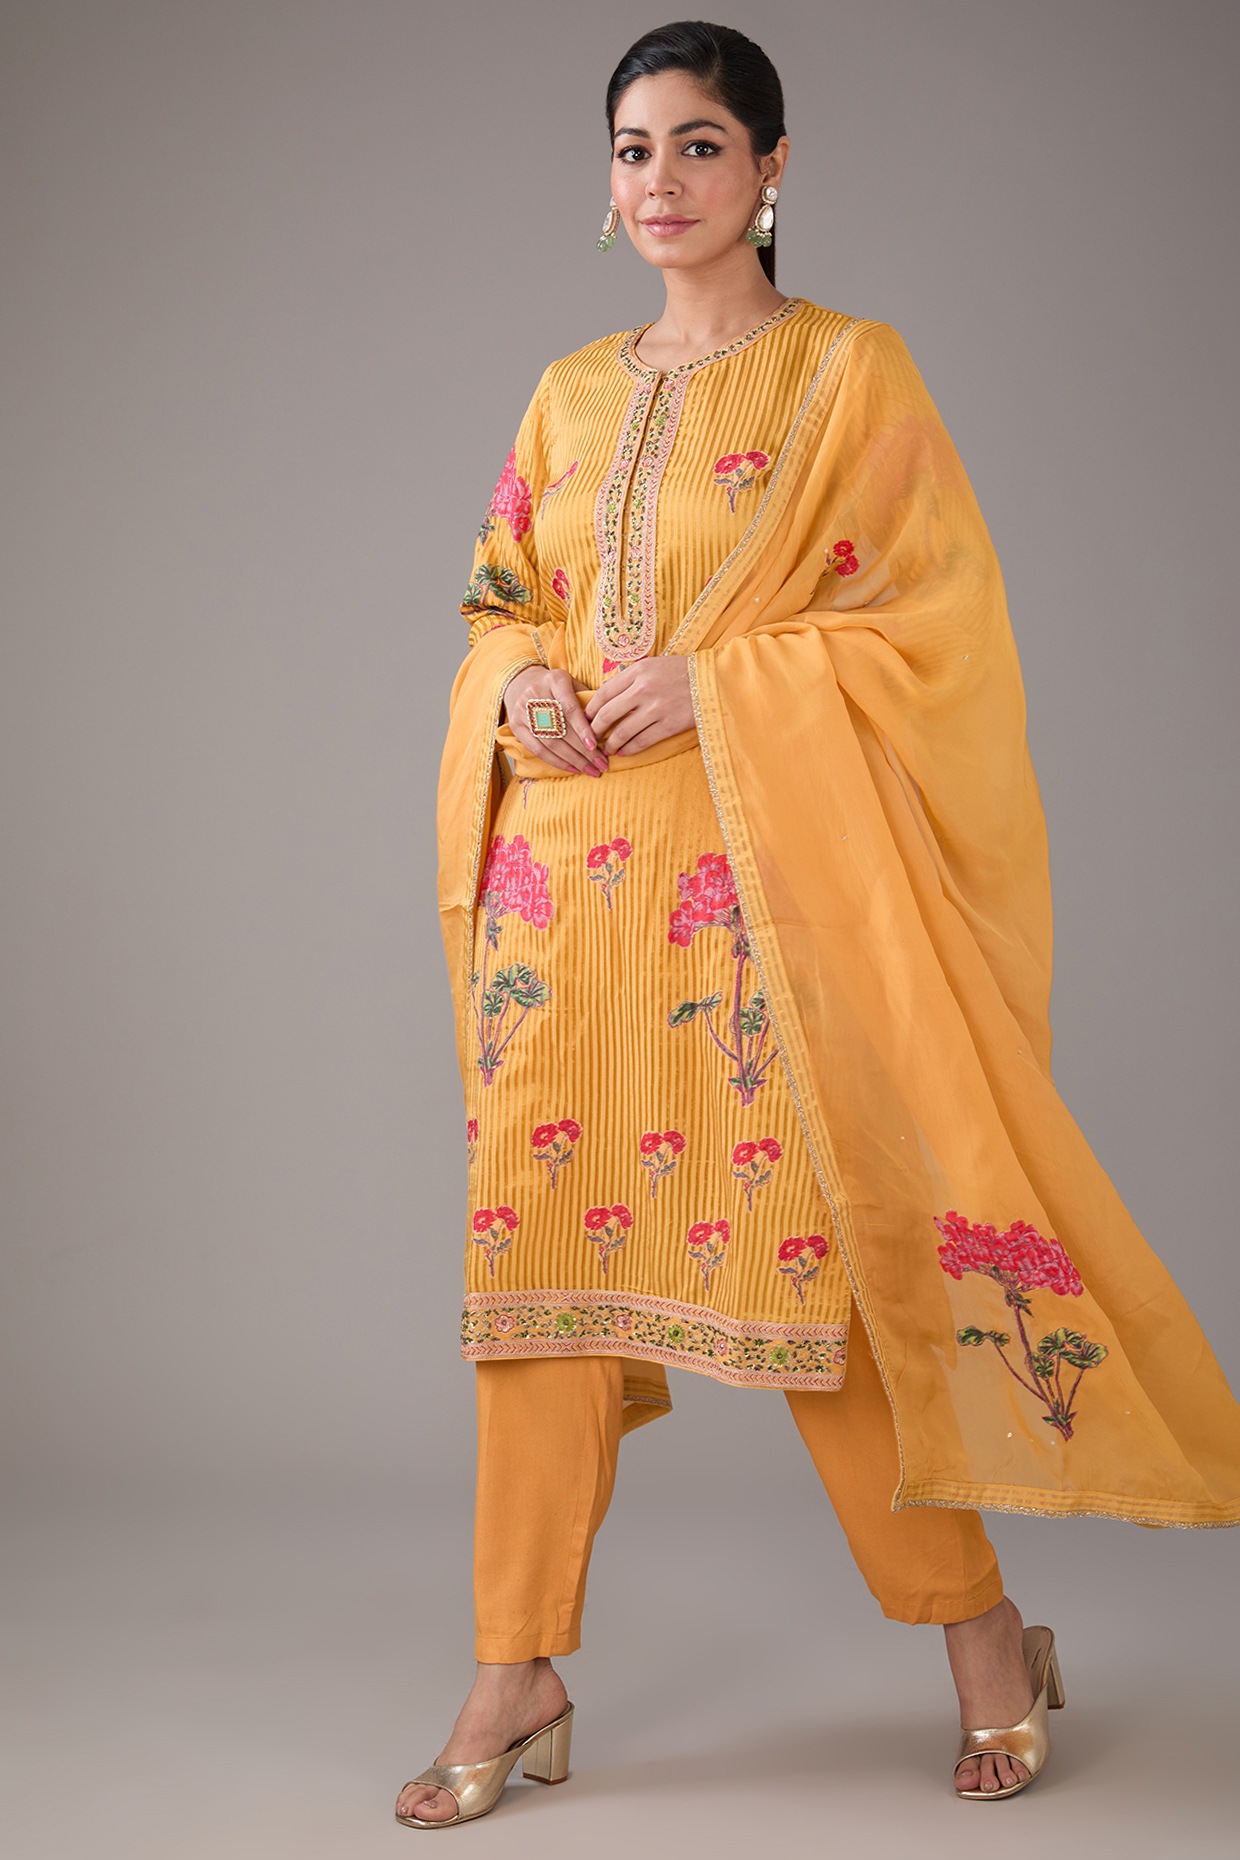 Buy Yellow Jacket Kurtas for Women Online in India - Indya